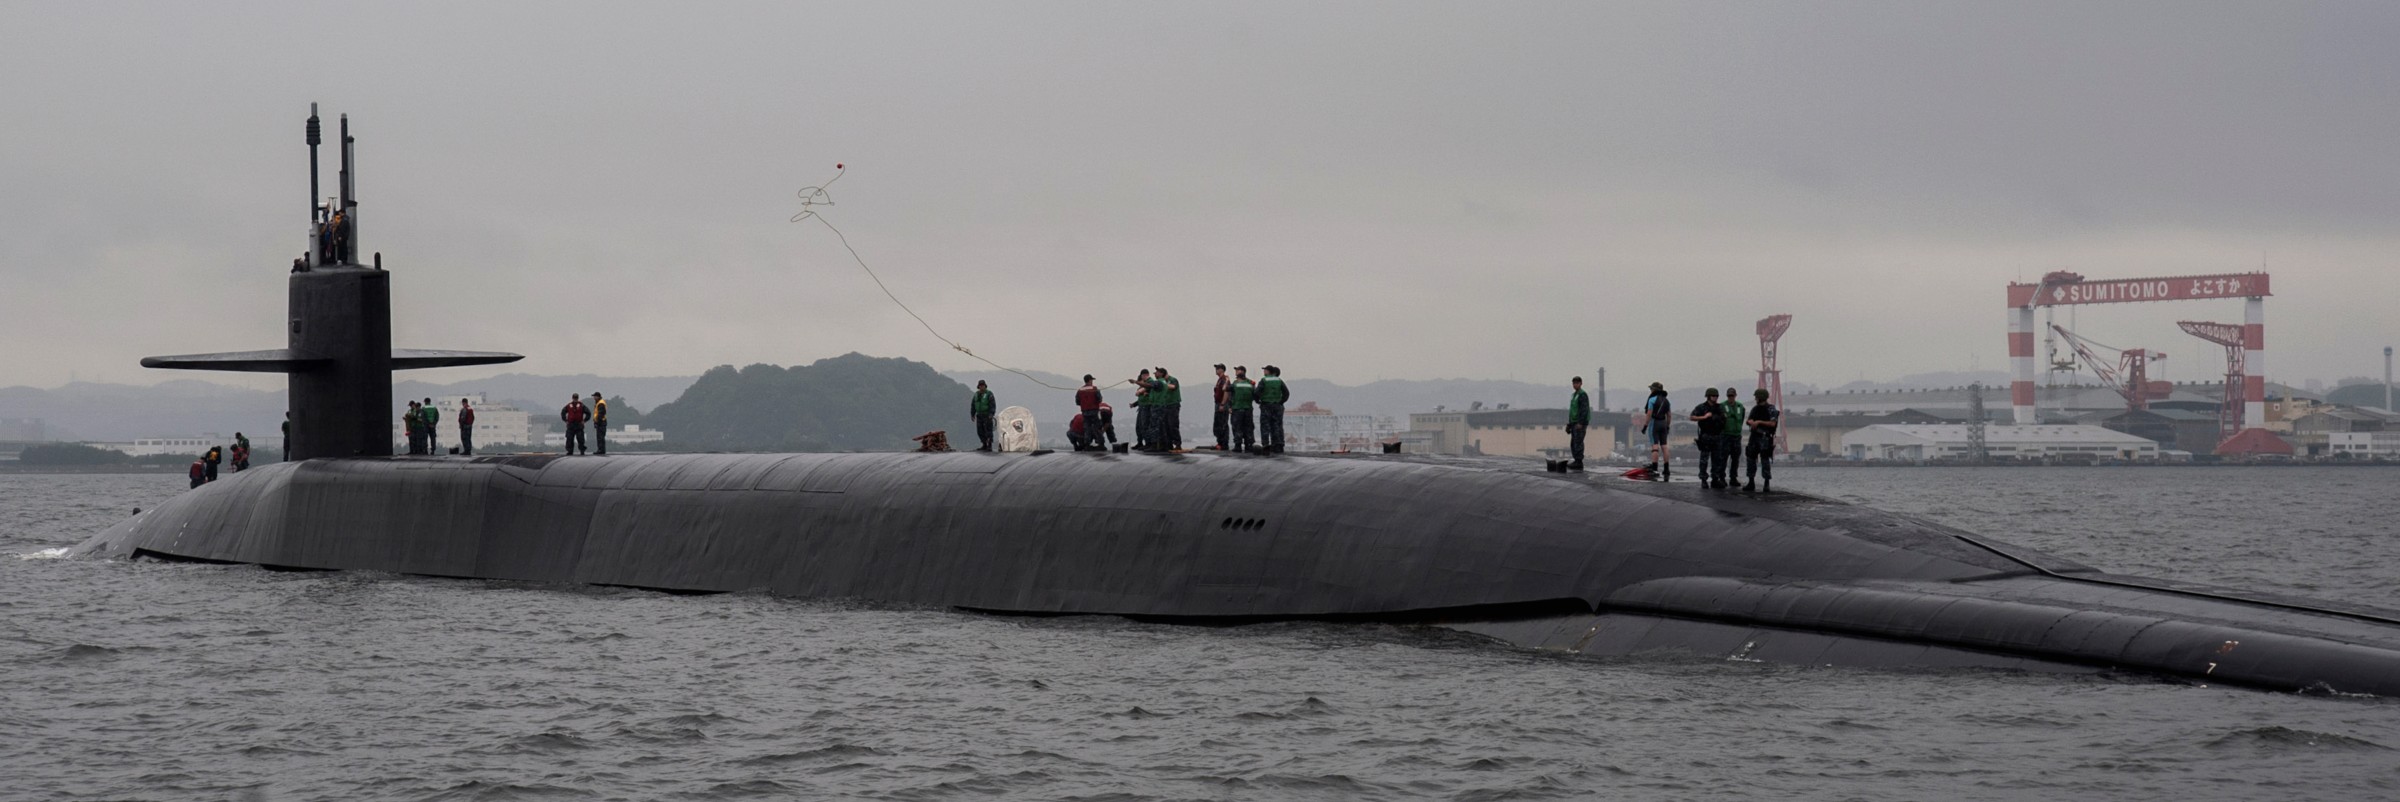 ssgn-727 uss michigan guided missile submarine 2015 07 yokosuka japan